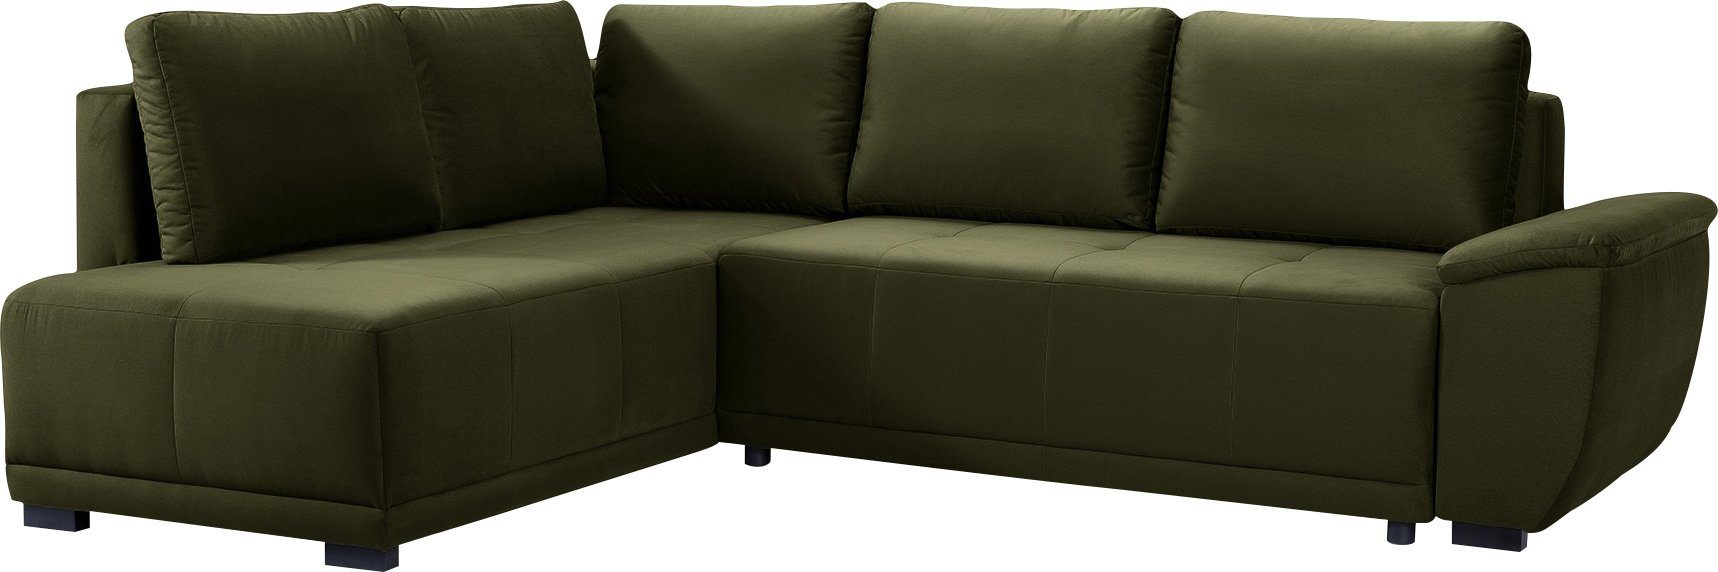 Ecksofa, 5 Rückenkissen Schlaffunktion inkl. sofa beidseitig, - fashion & Bettkasten, exxpo mane